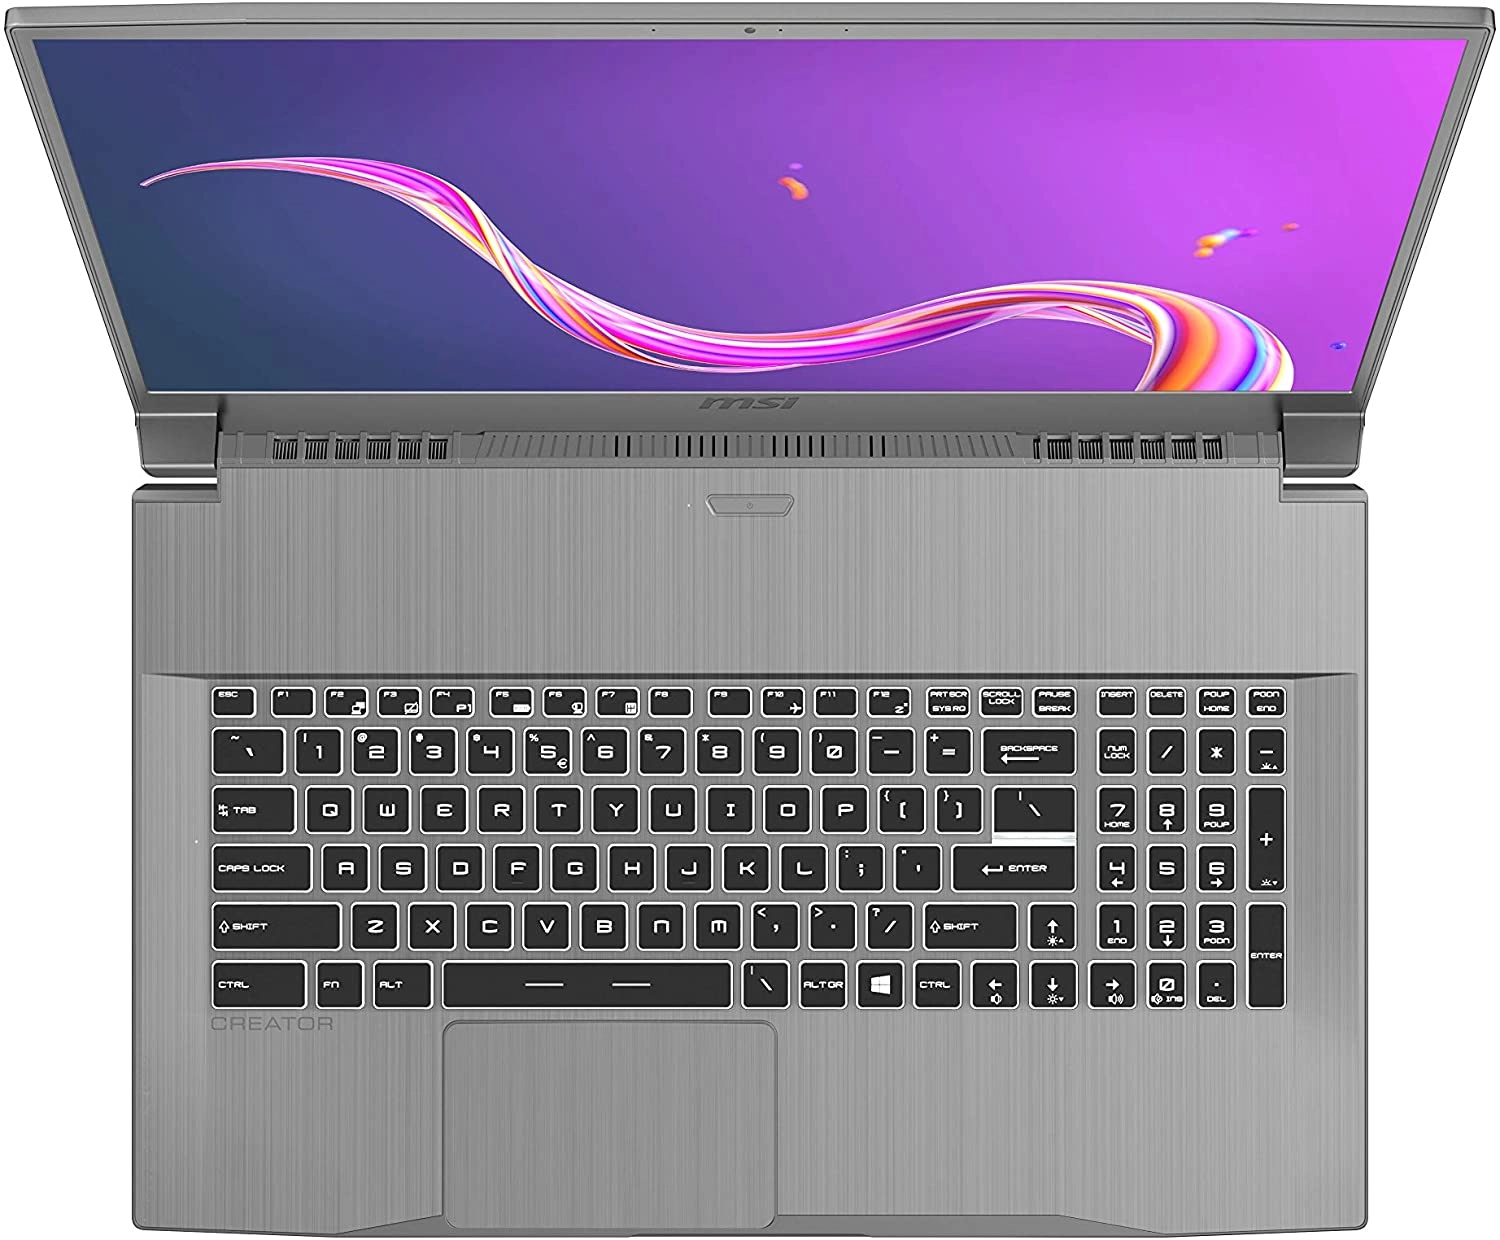 MSI Creator 17M A10SD laptop image